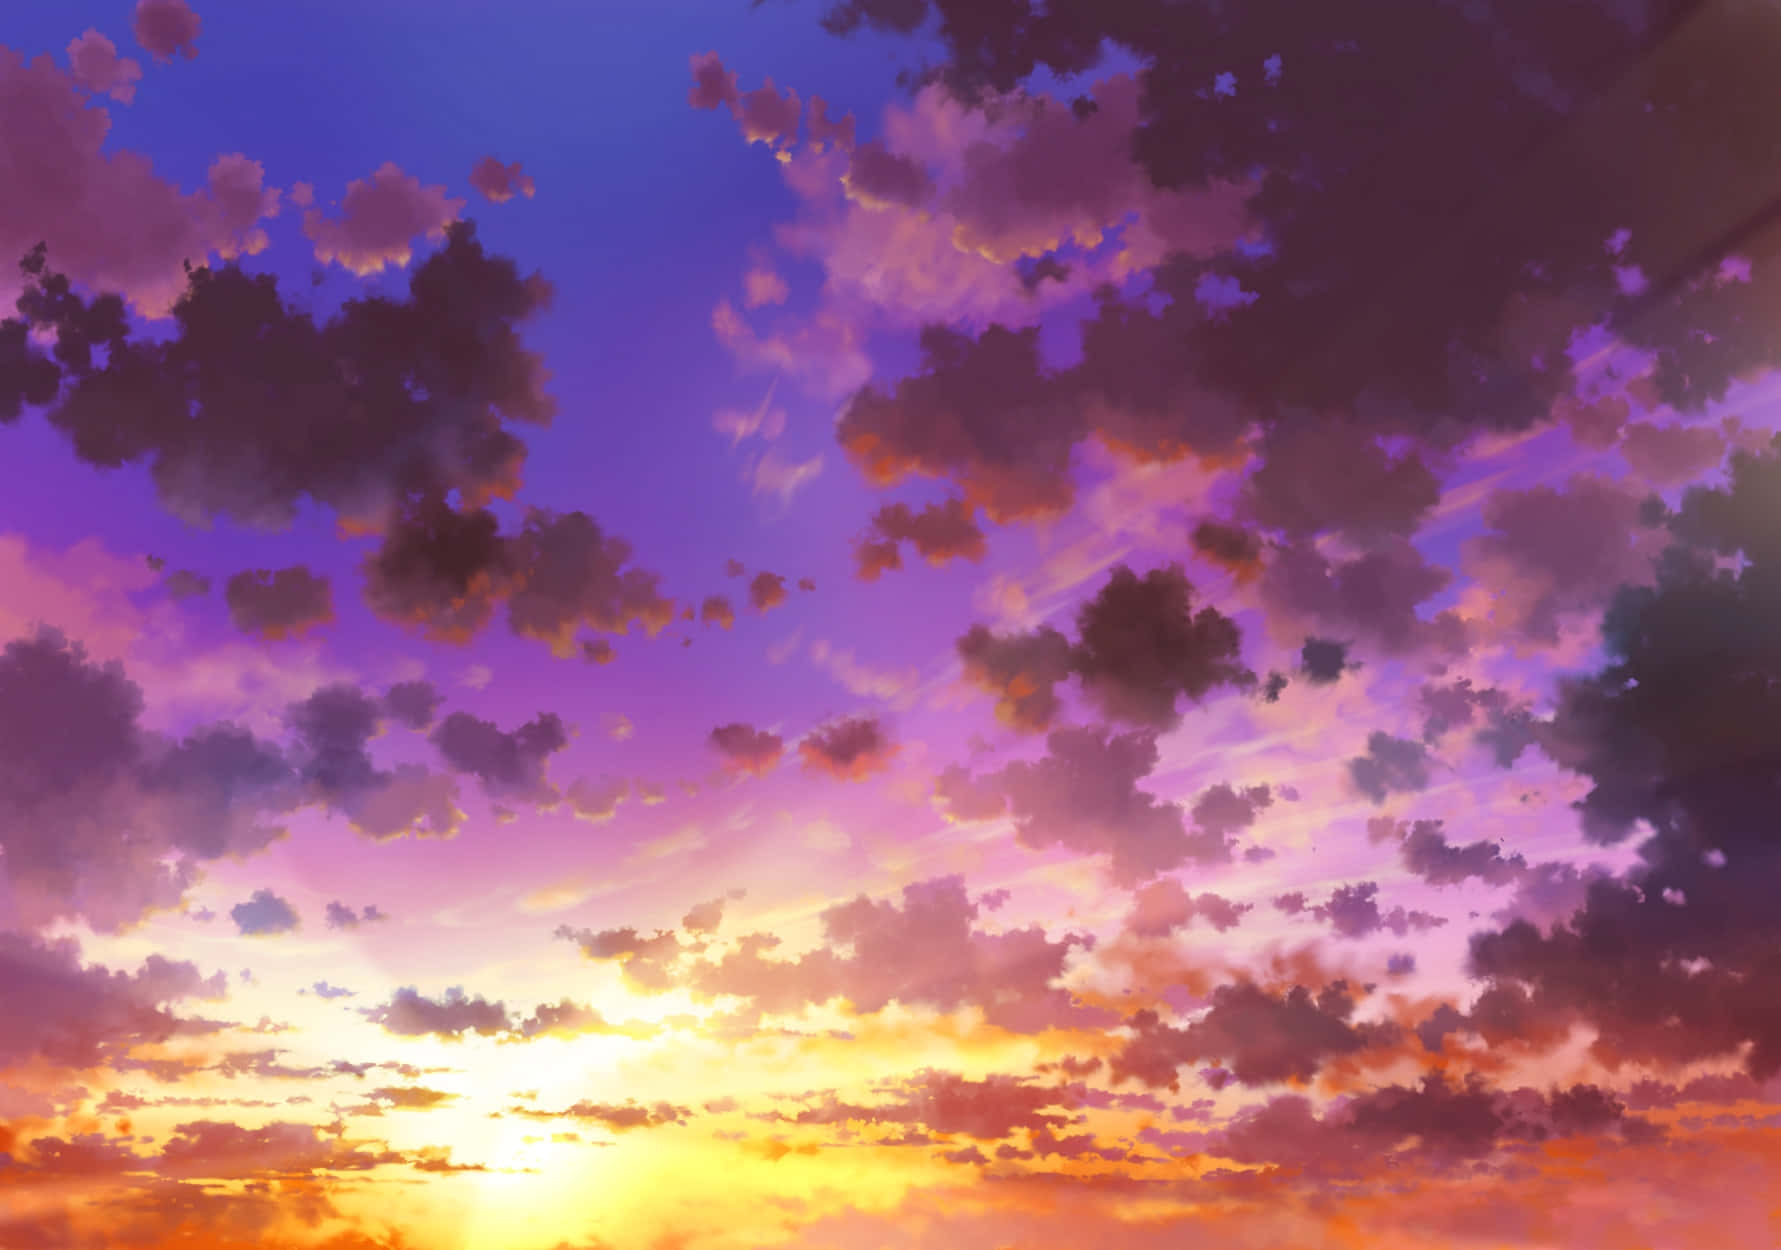 Serene Anime Sunset in a Dreamy World